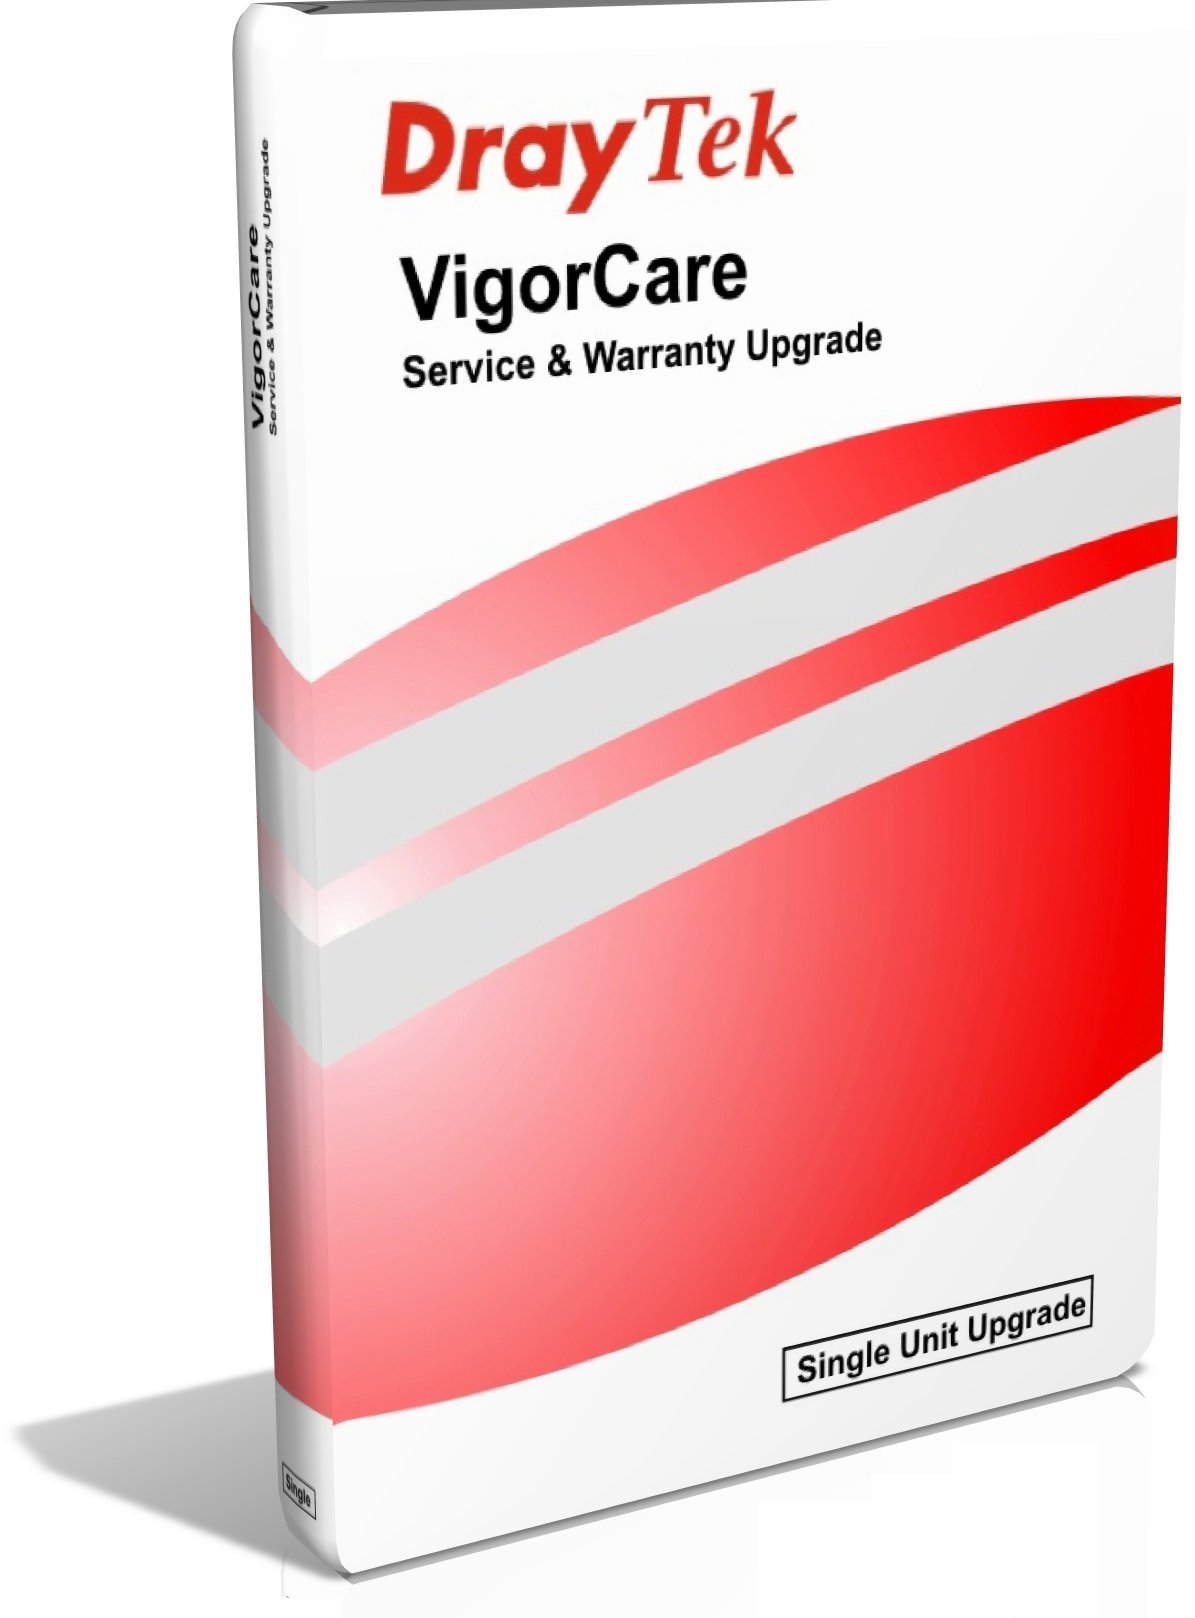 DrayTek VigorCare Extended Warranty A5 5 Year Care Package